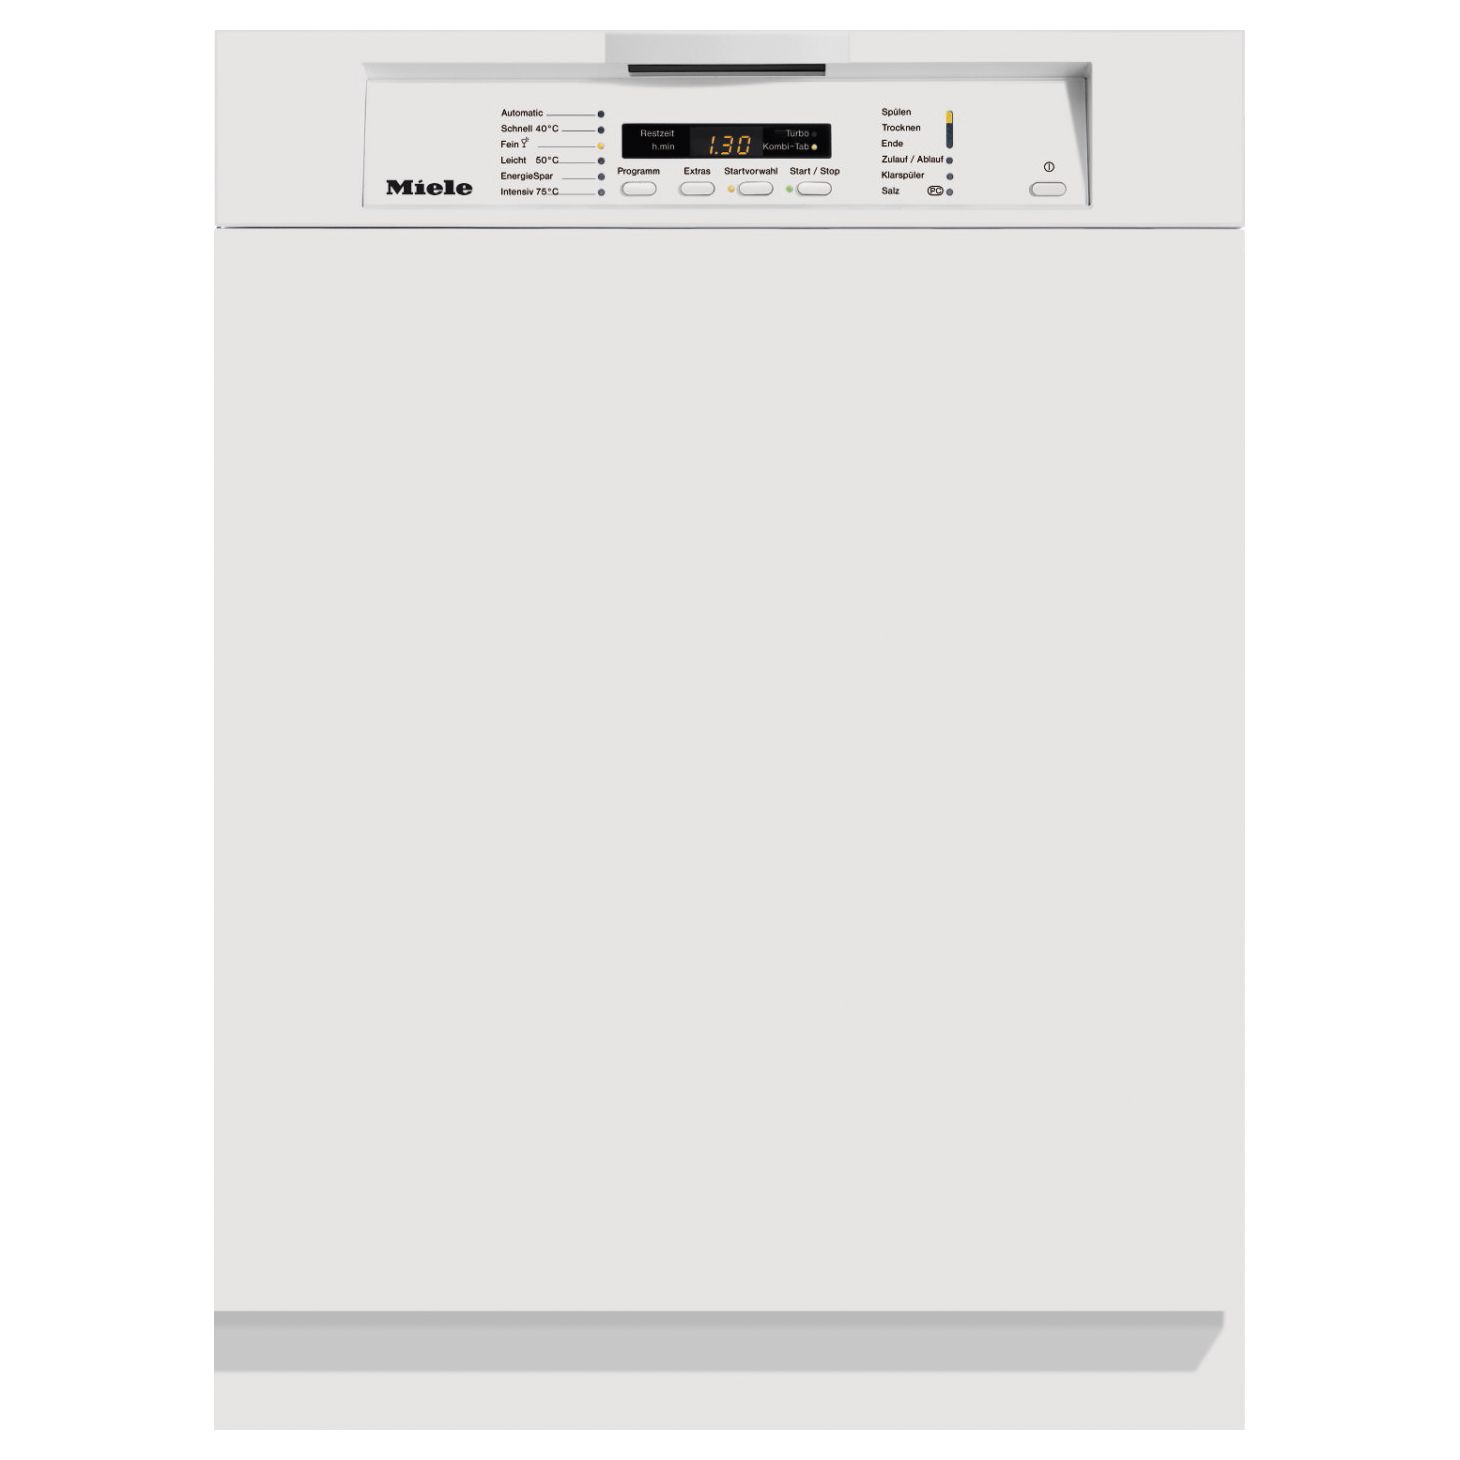 Miele G1252SCi Semi-Integrated Dishwasher, White at John Lewis